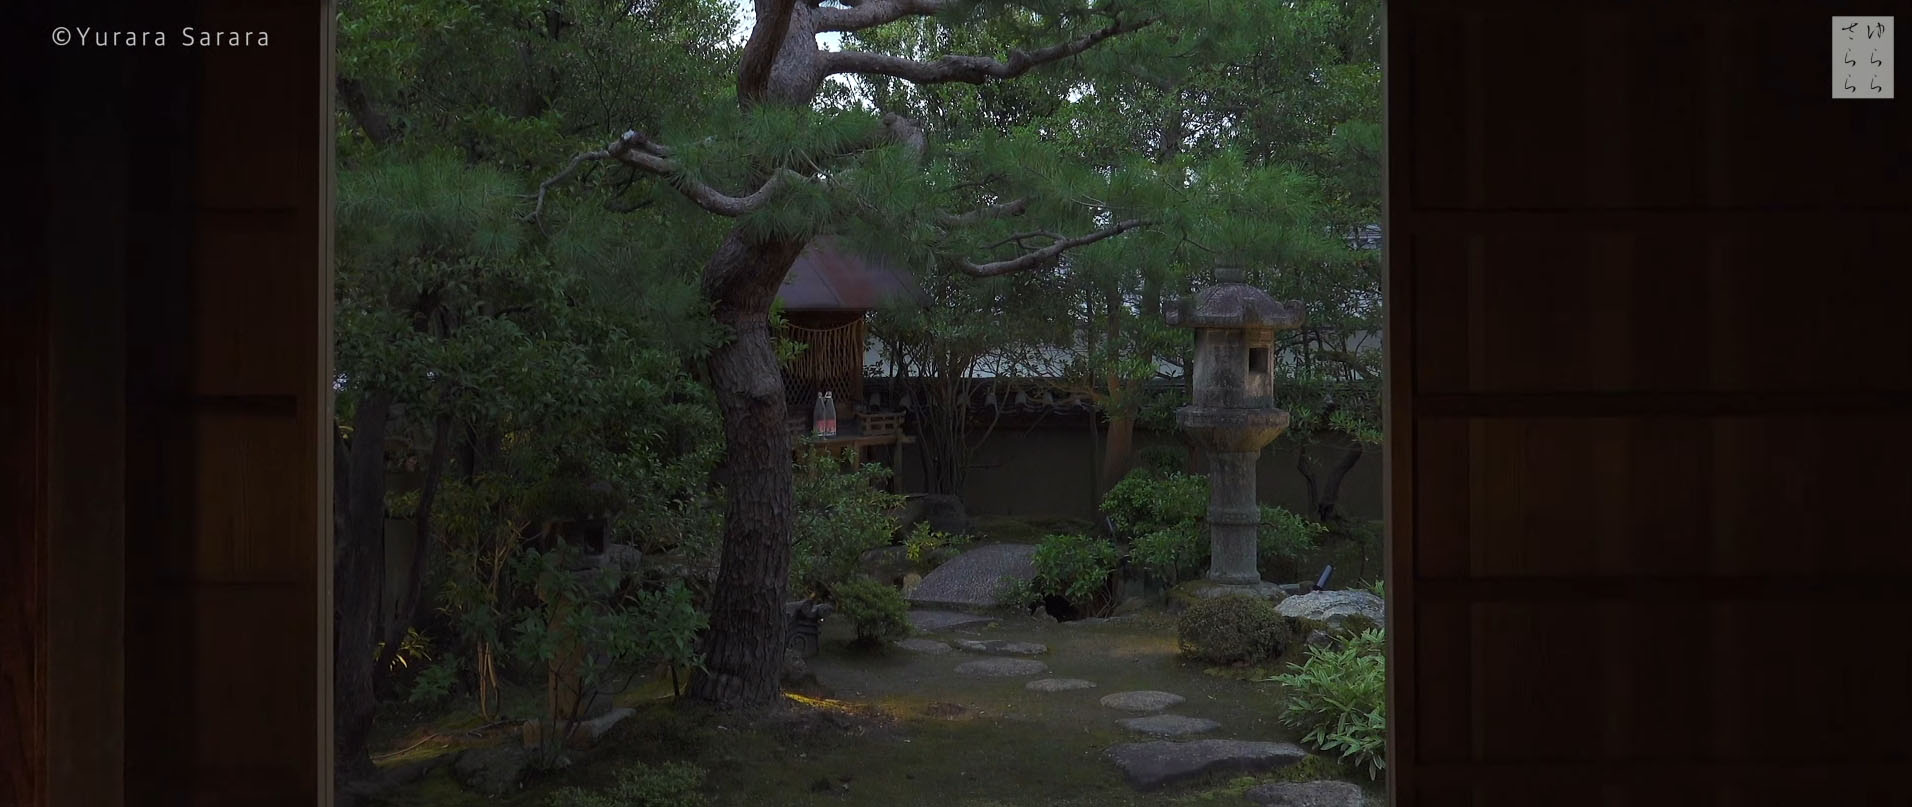 Wabi-Sabi-侘寂庭院,侘寂庭院,日本,侘寂設計,侘寂視頻下載,日式侘寂庭院